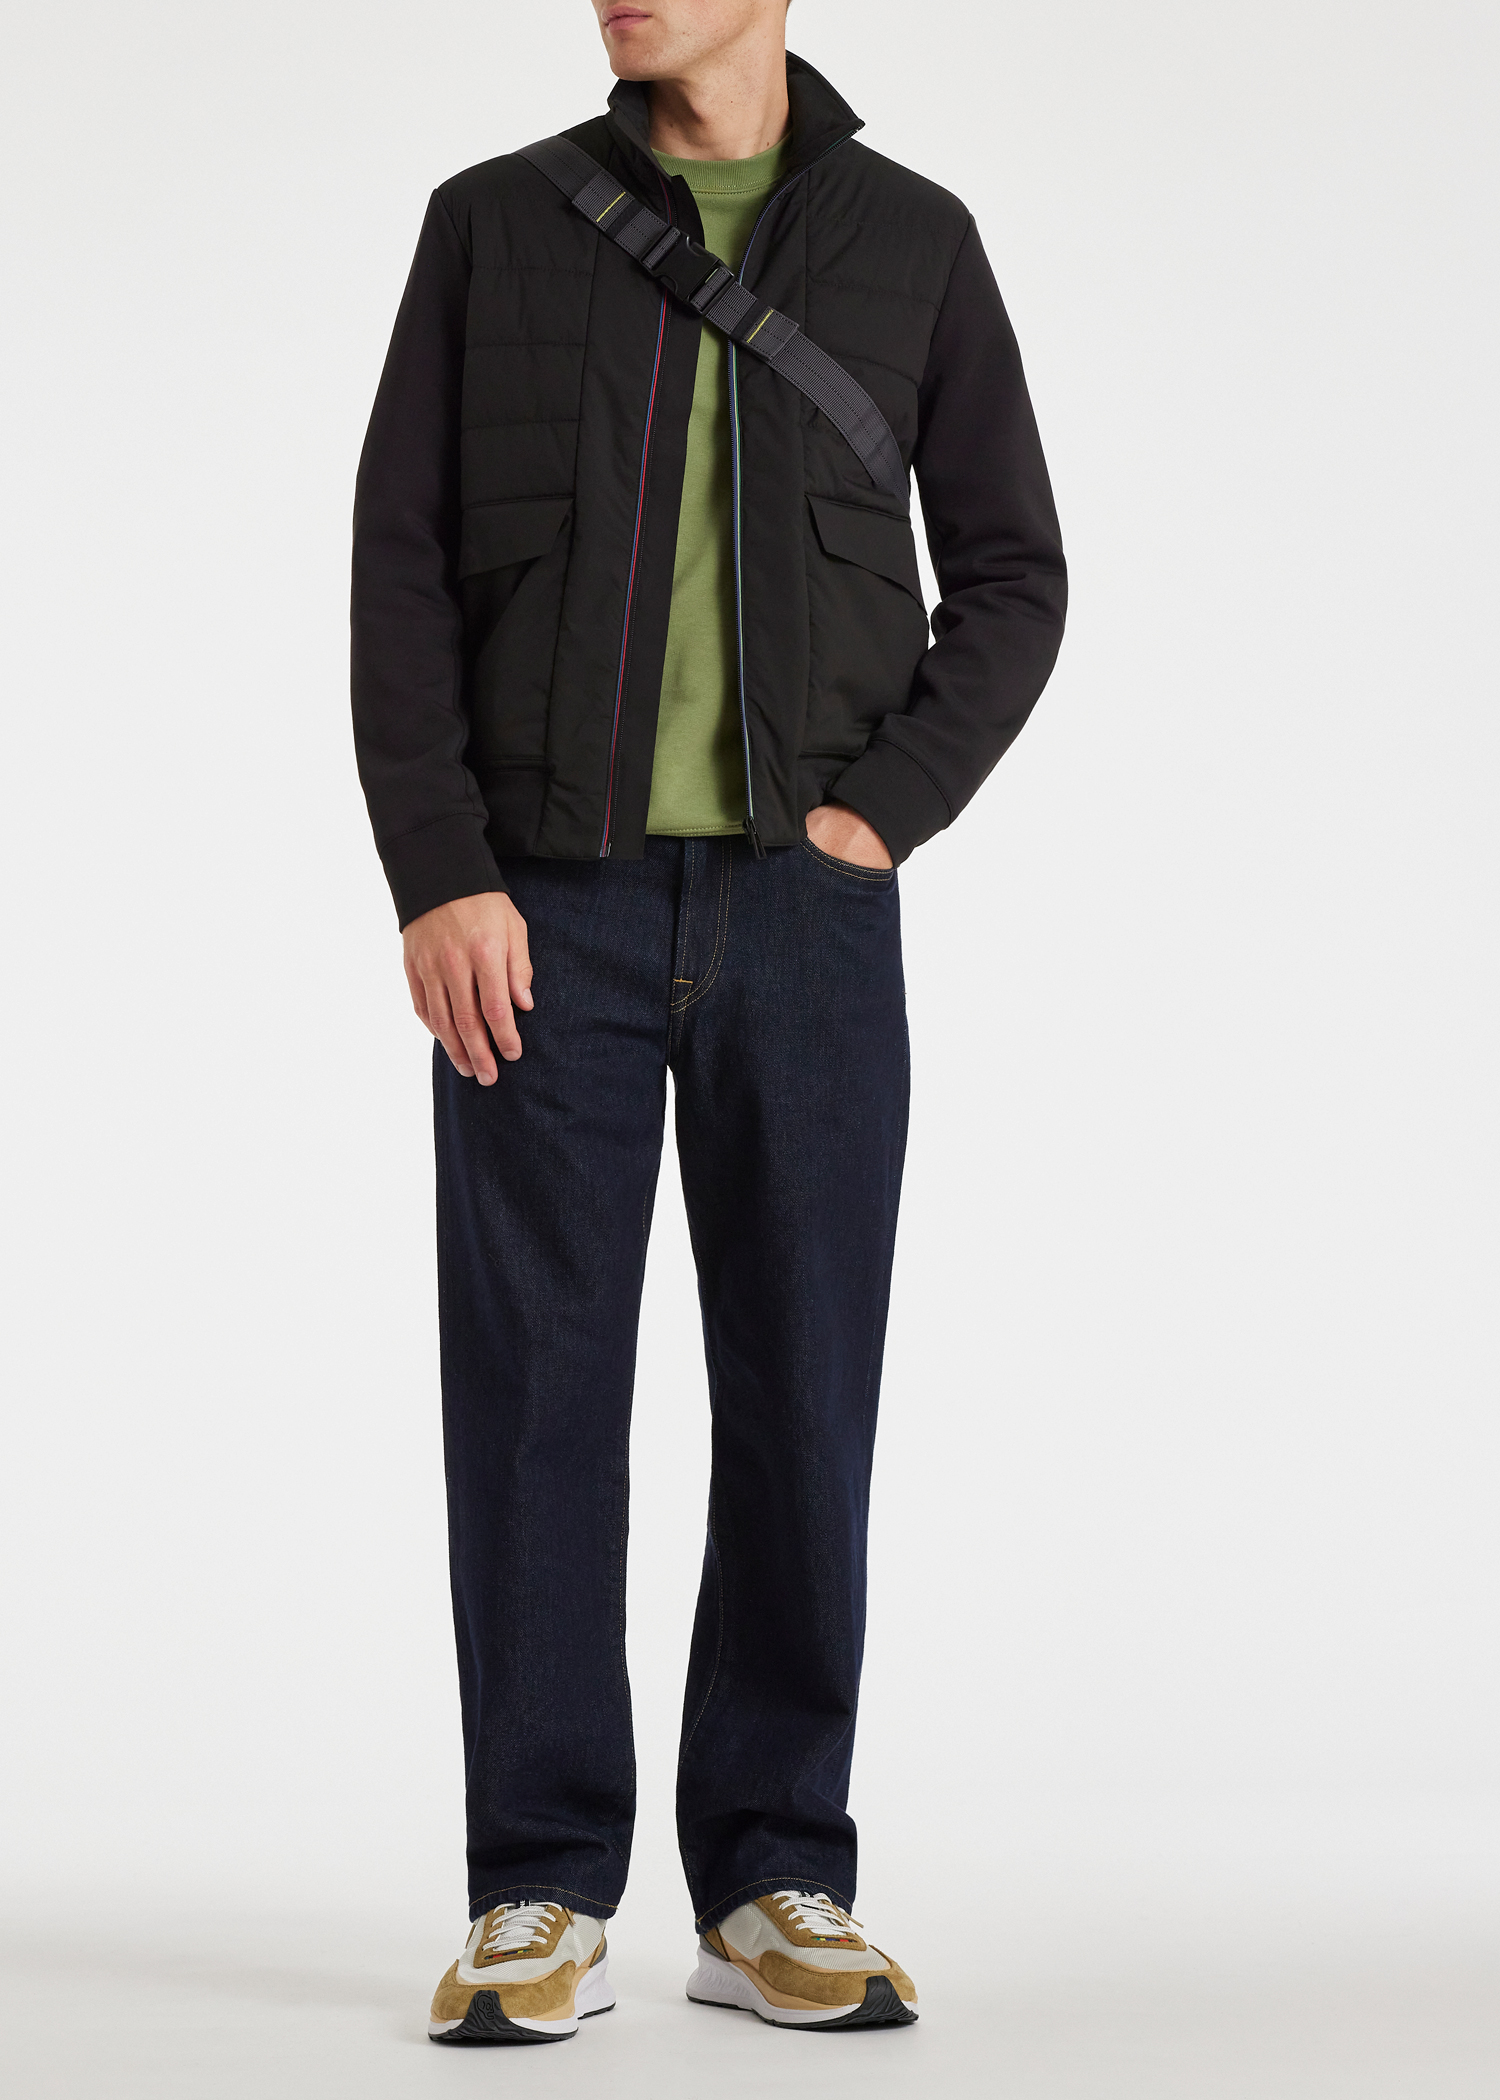 Designer Coats & Jackets for Men | Paul Smith